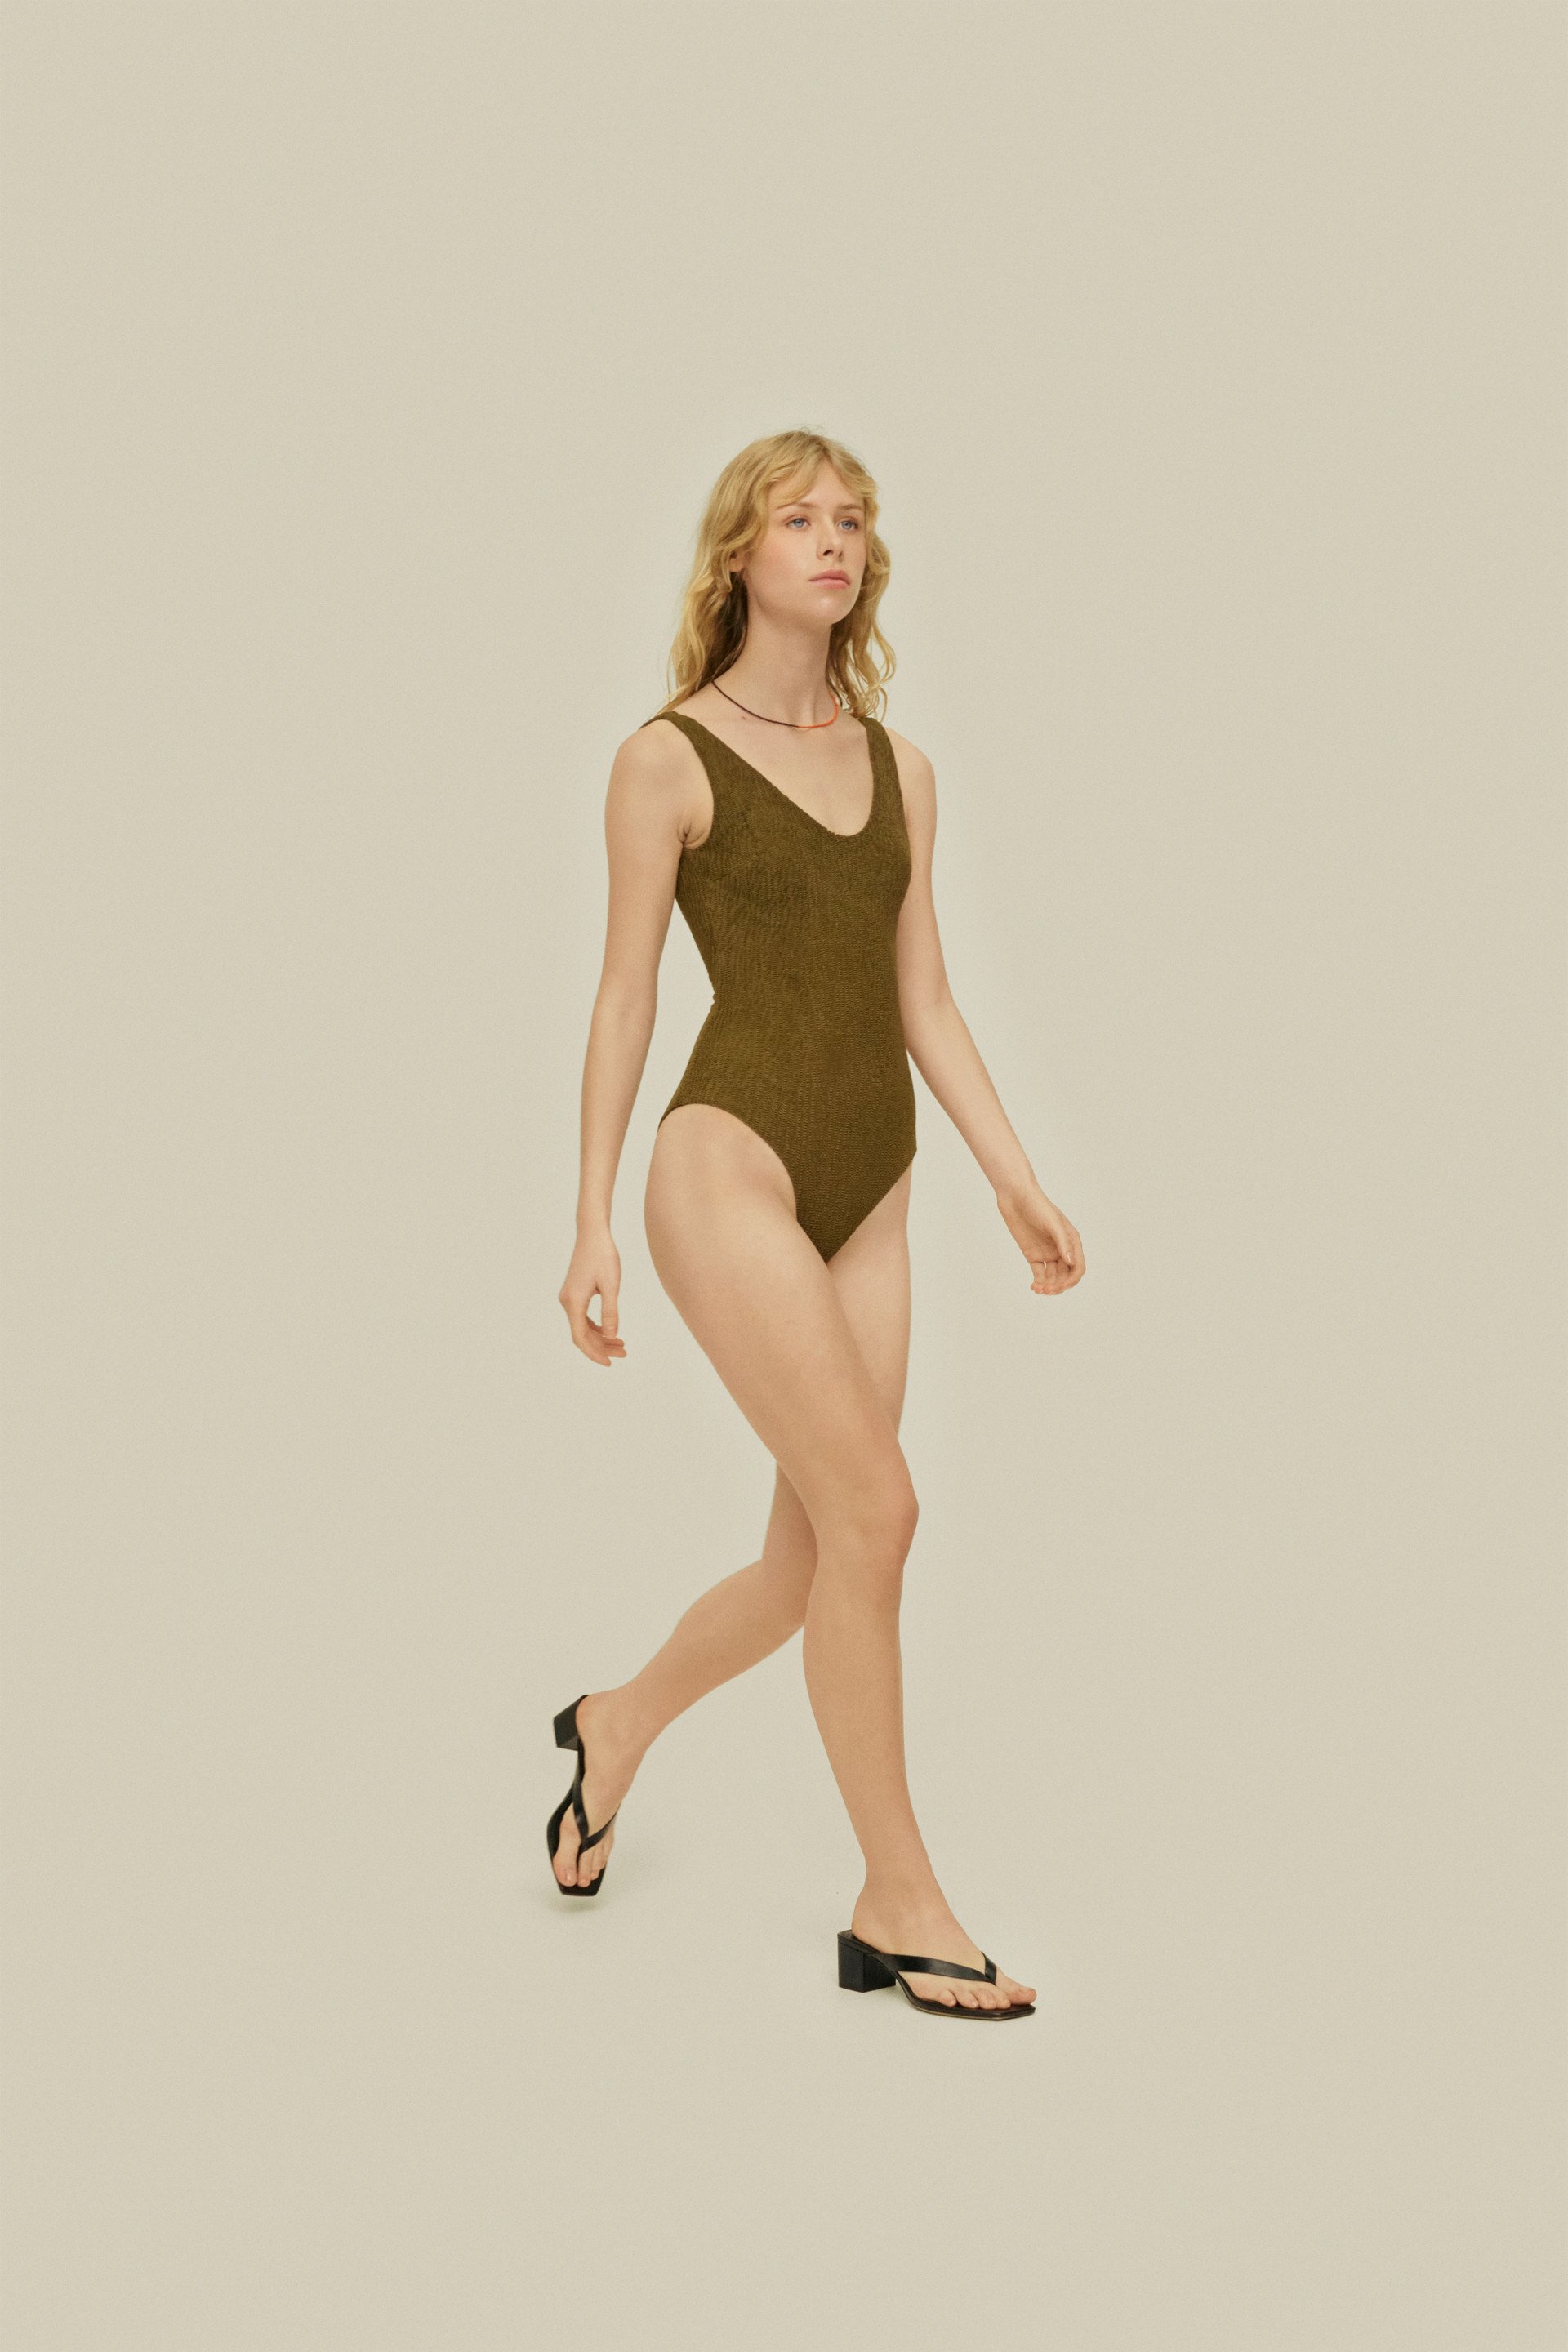 Aayomet Women's Color Blocking Conservative 1piece Swimsuit Women's Sense  Backless Suspender Swimsuit Flat Bikini,Green Small 